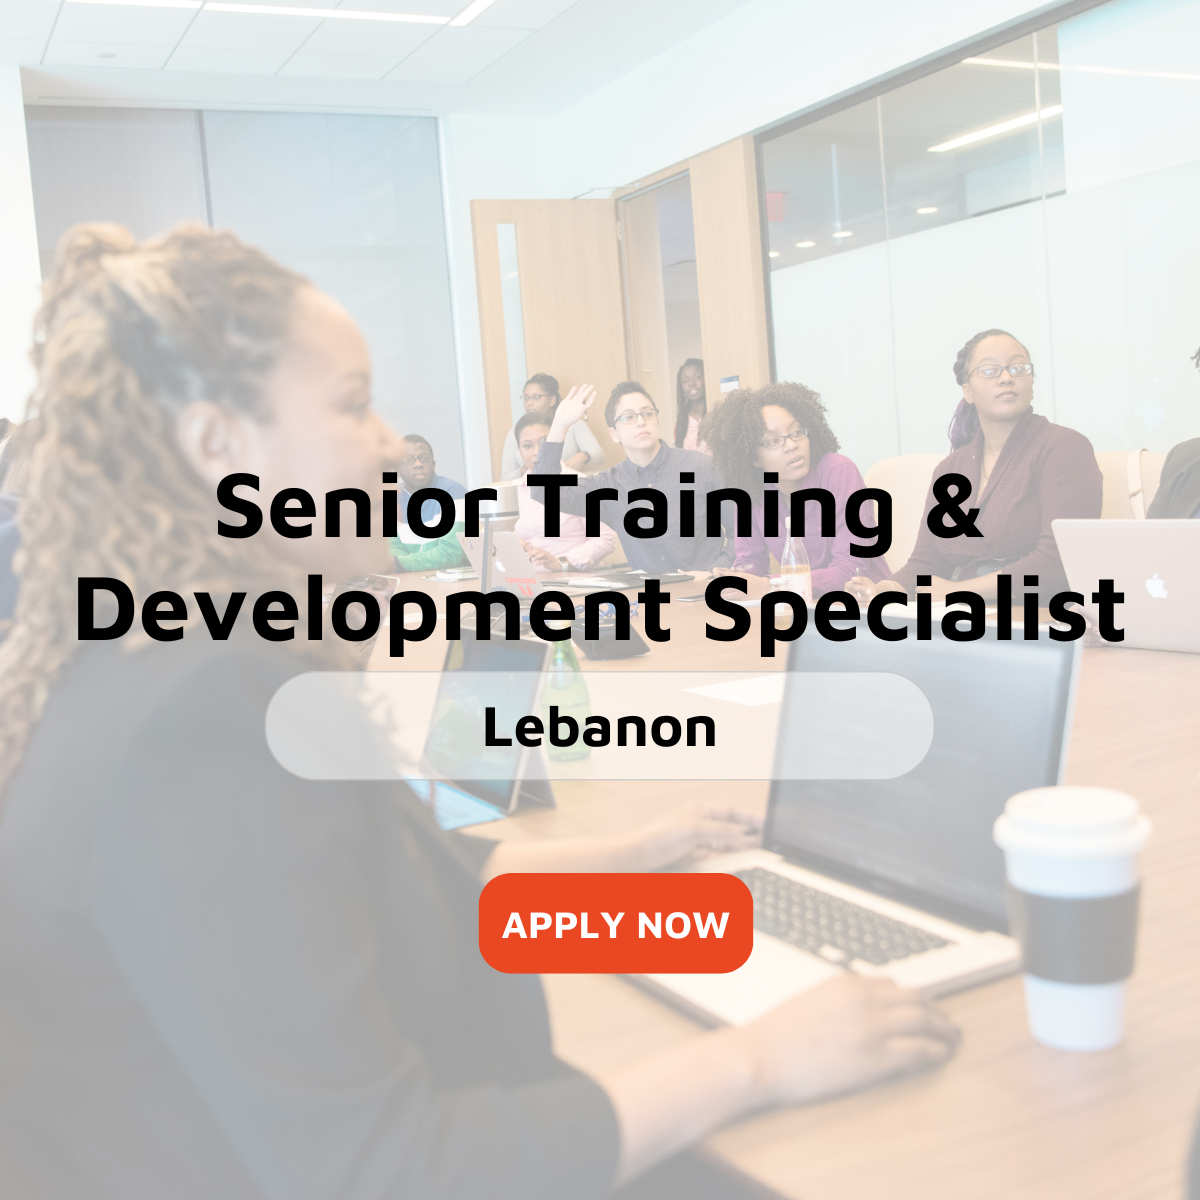 Senior Training & Development Specialist